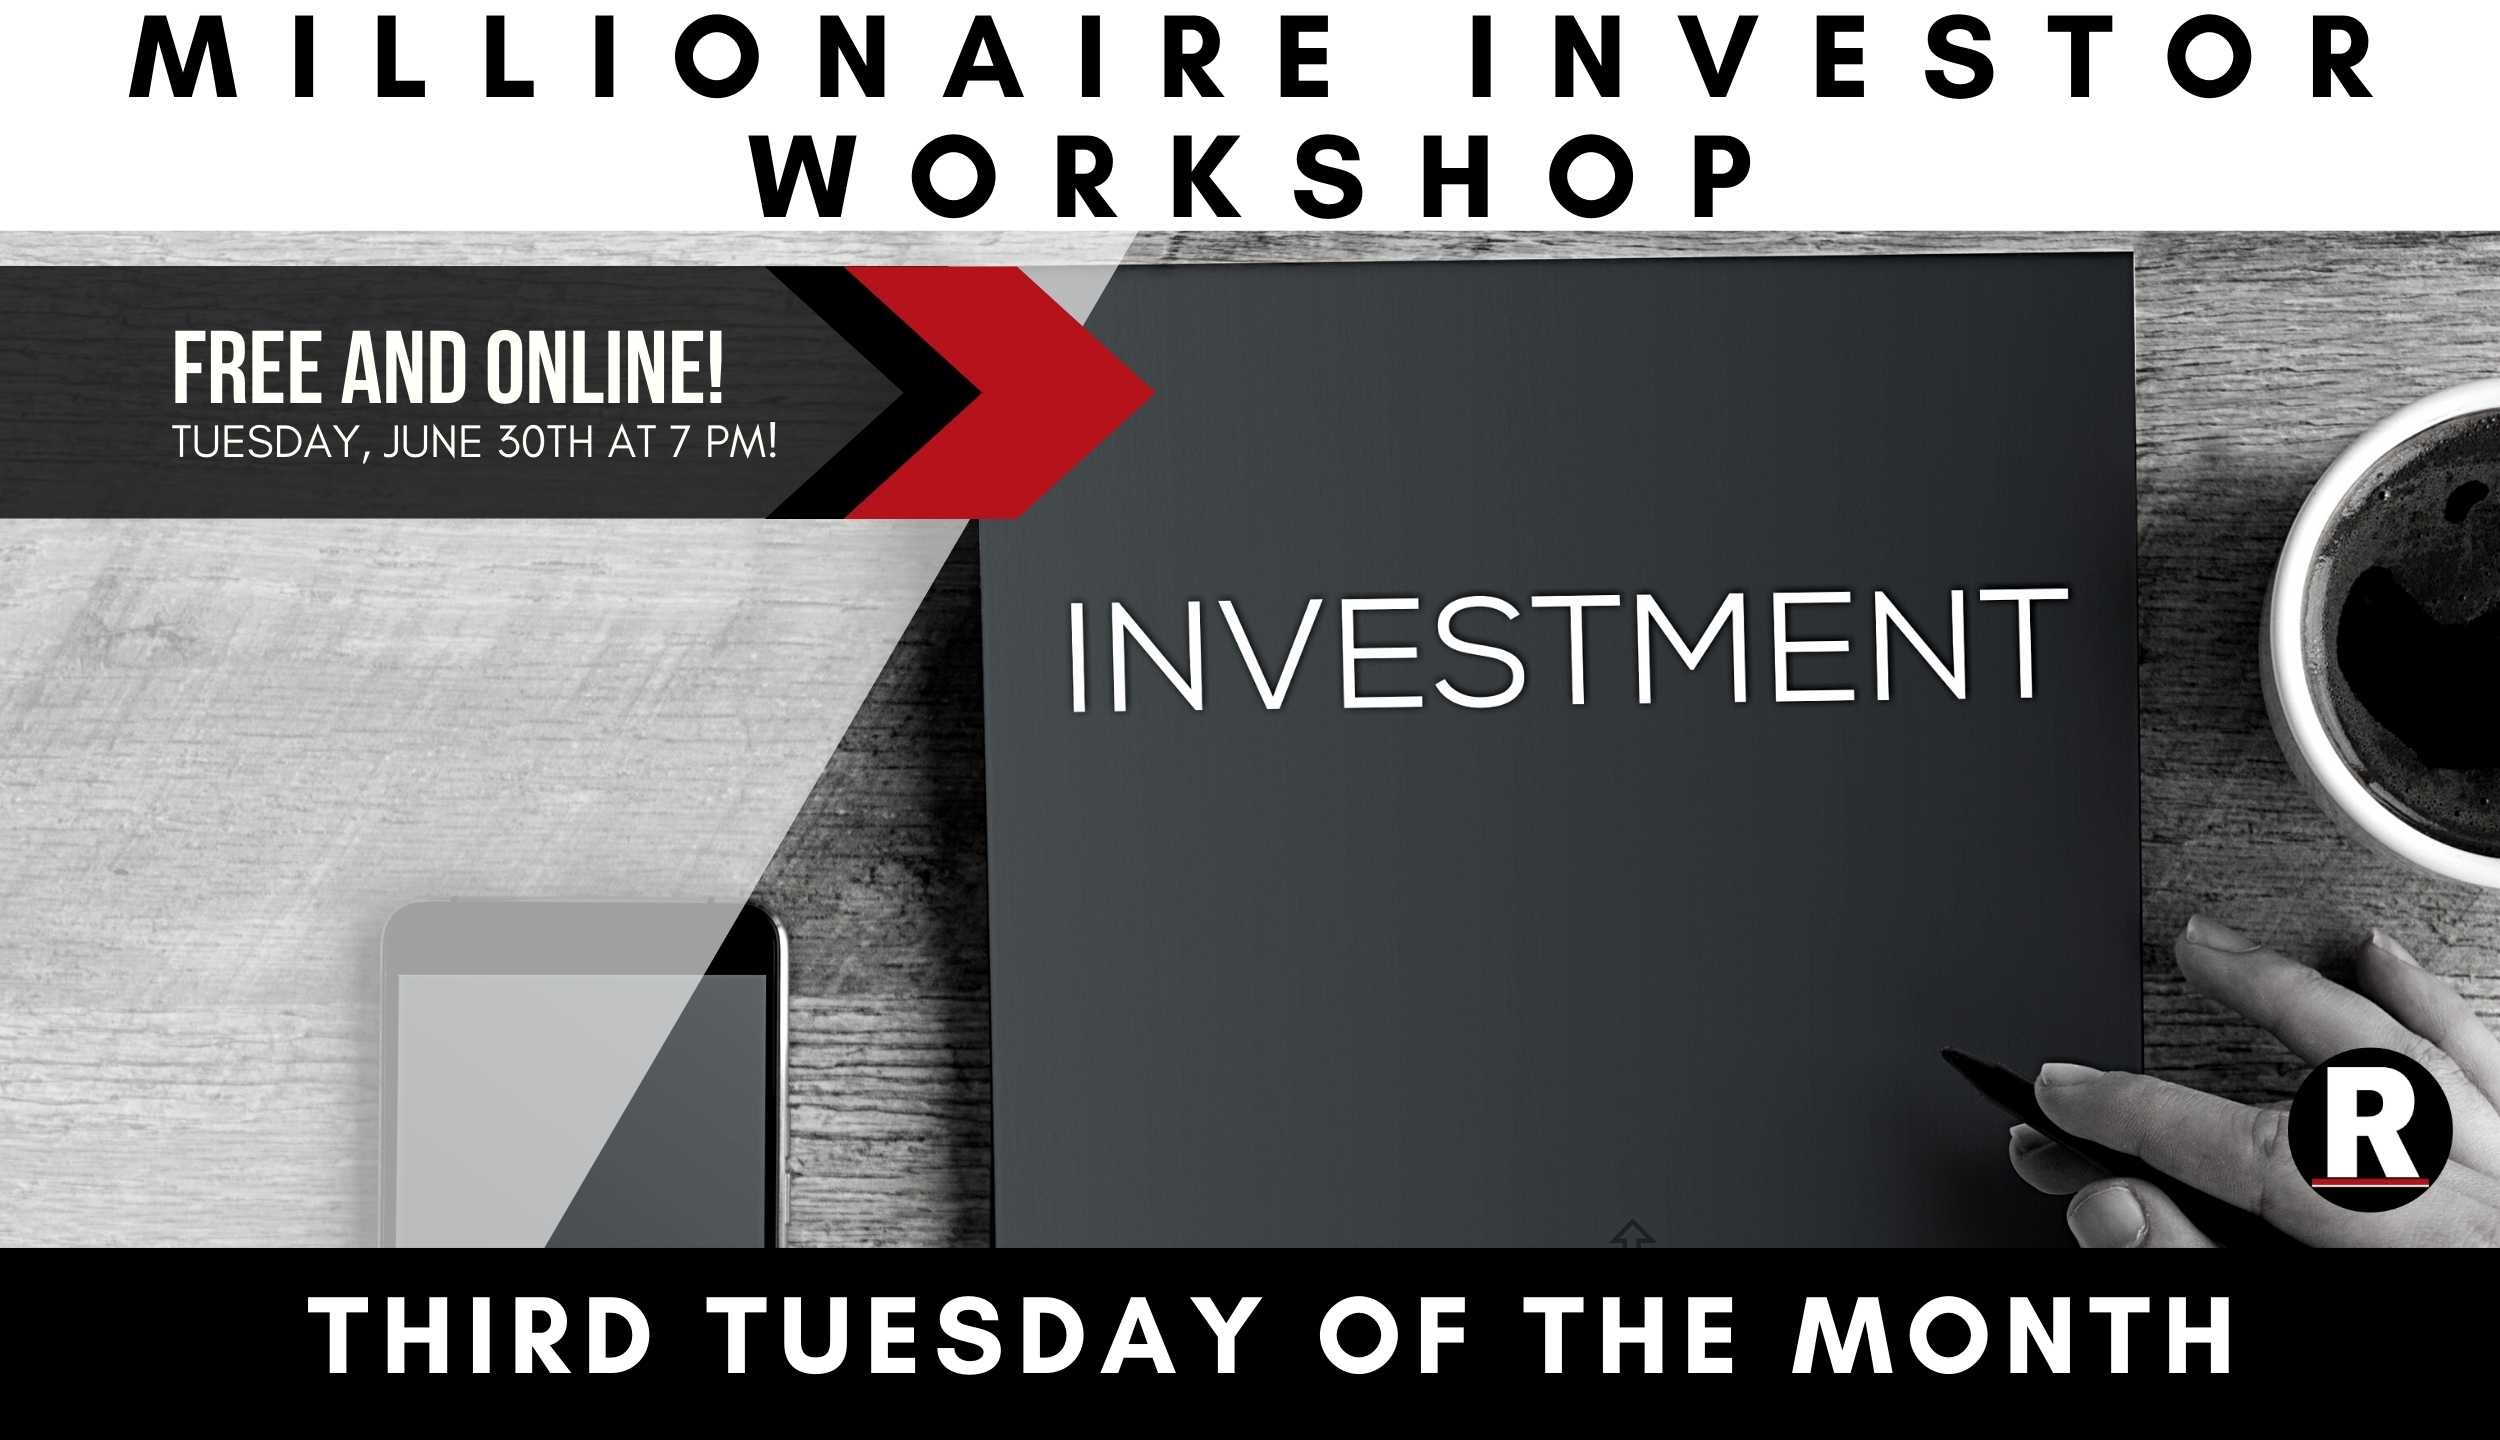 Millionaire Investor Workshop – FREE and ONLINE